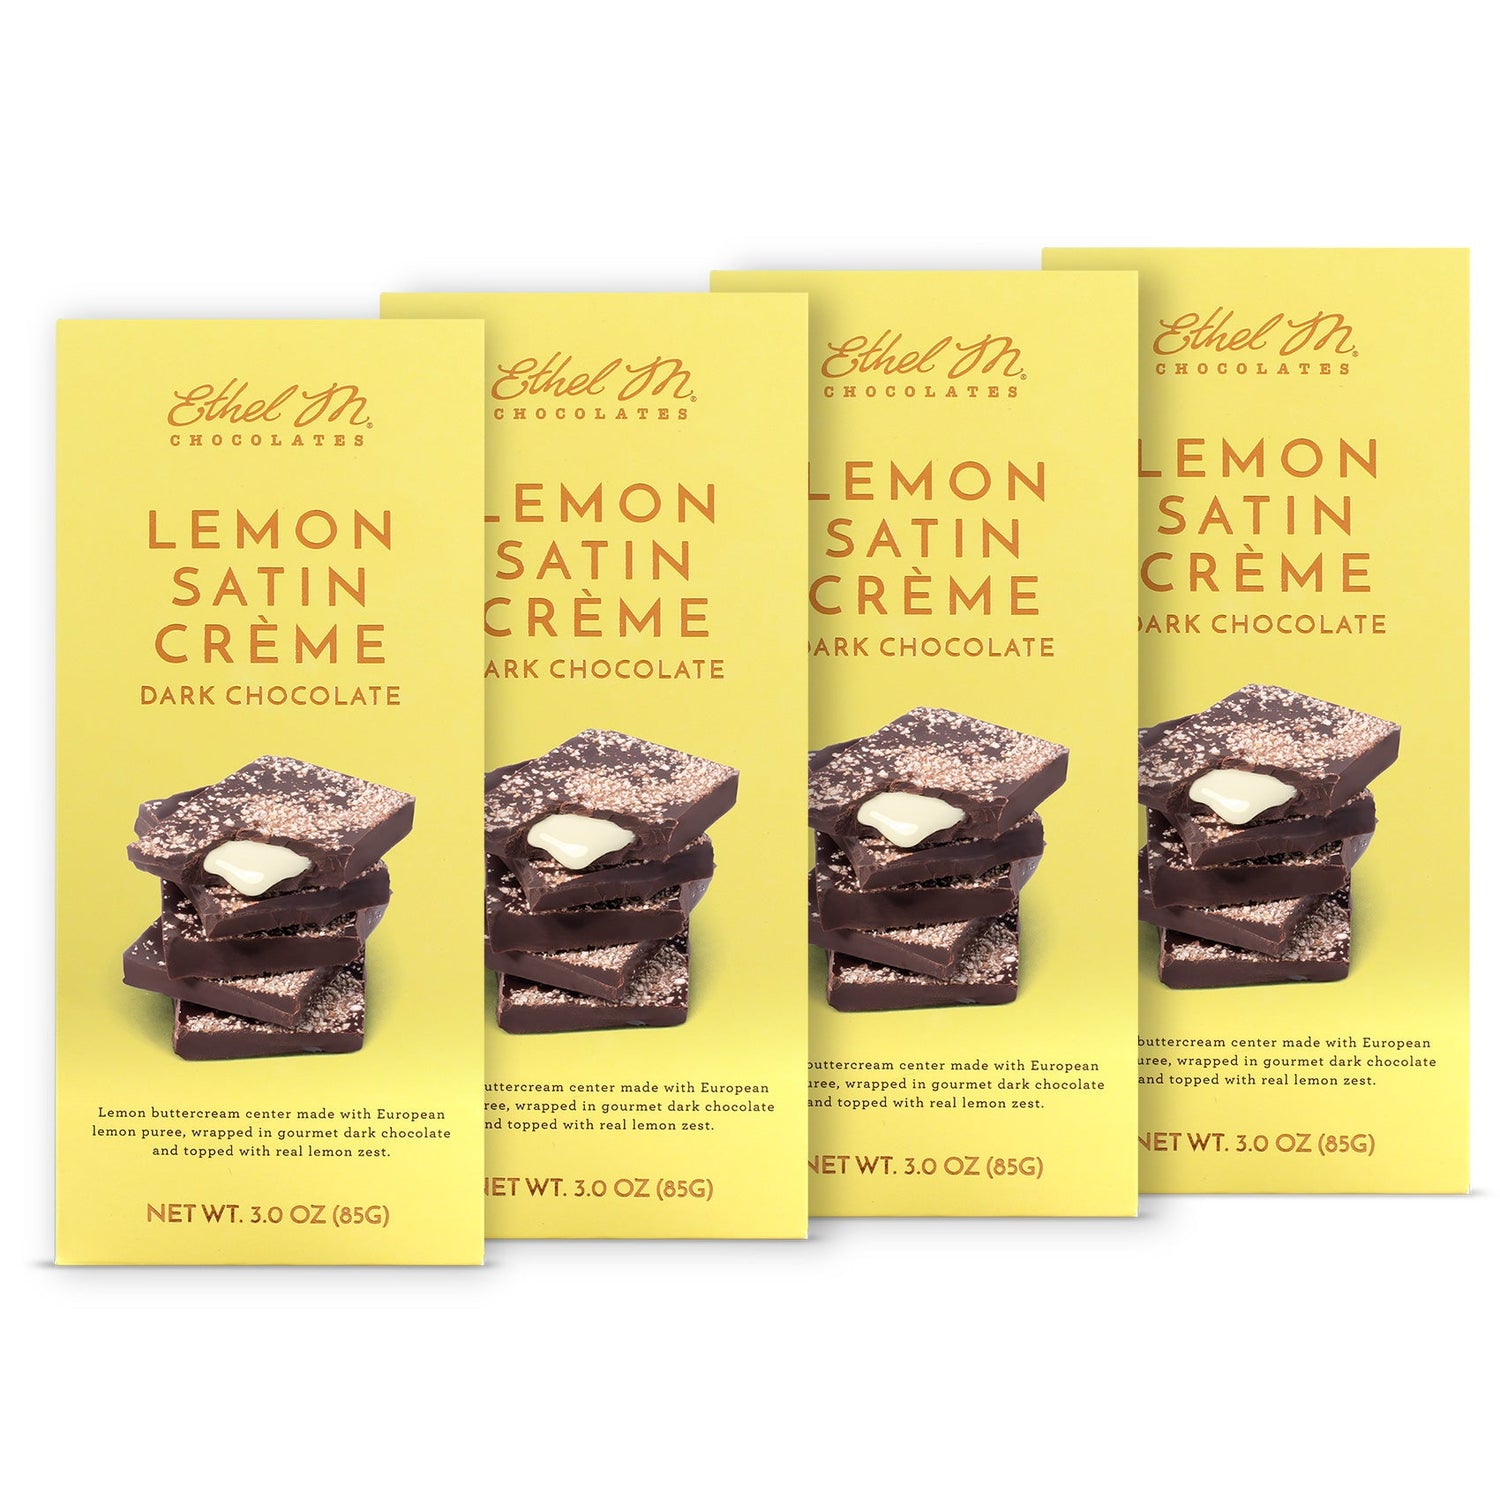 Set of 4 Lemon Satin Creme Dark Chocolate bars